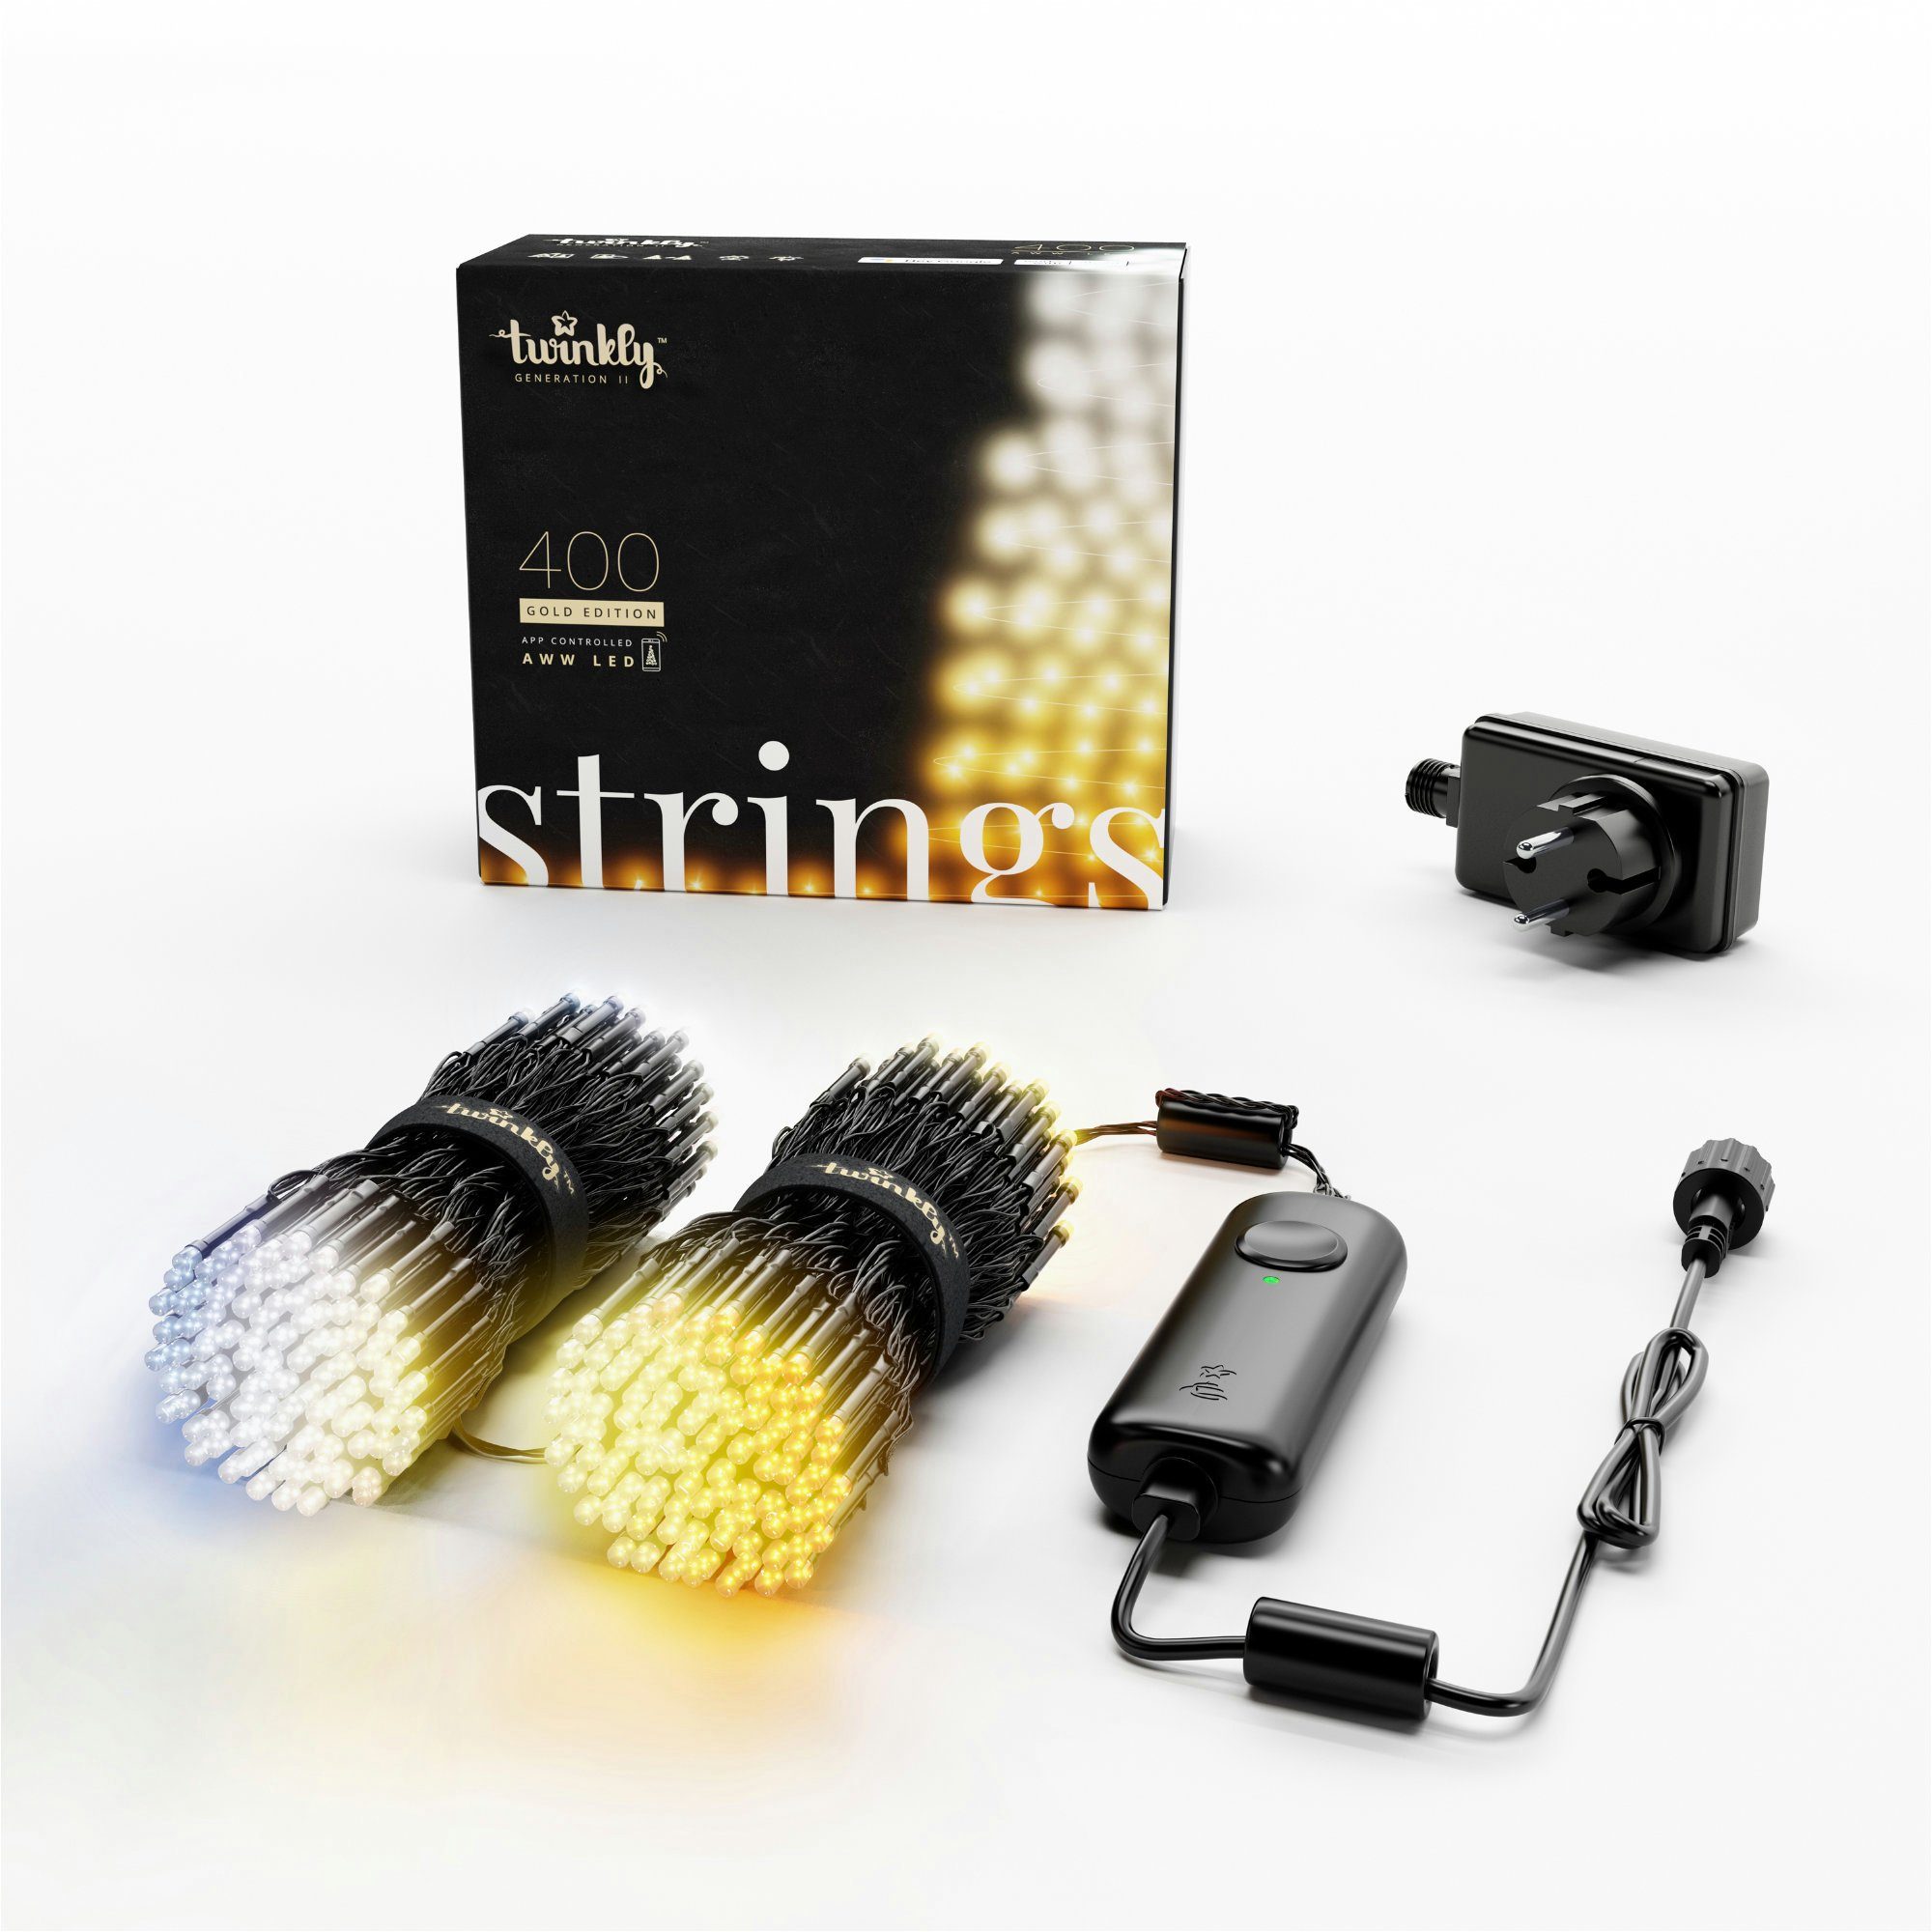 twinkly LED-Lichterkette STRINGS, 400 4,3mm LED AWW Weiß / Warmweiß, Kabel Schwarz, 32m Довжина